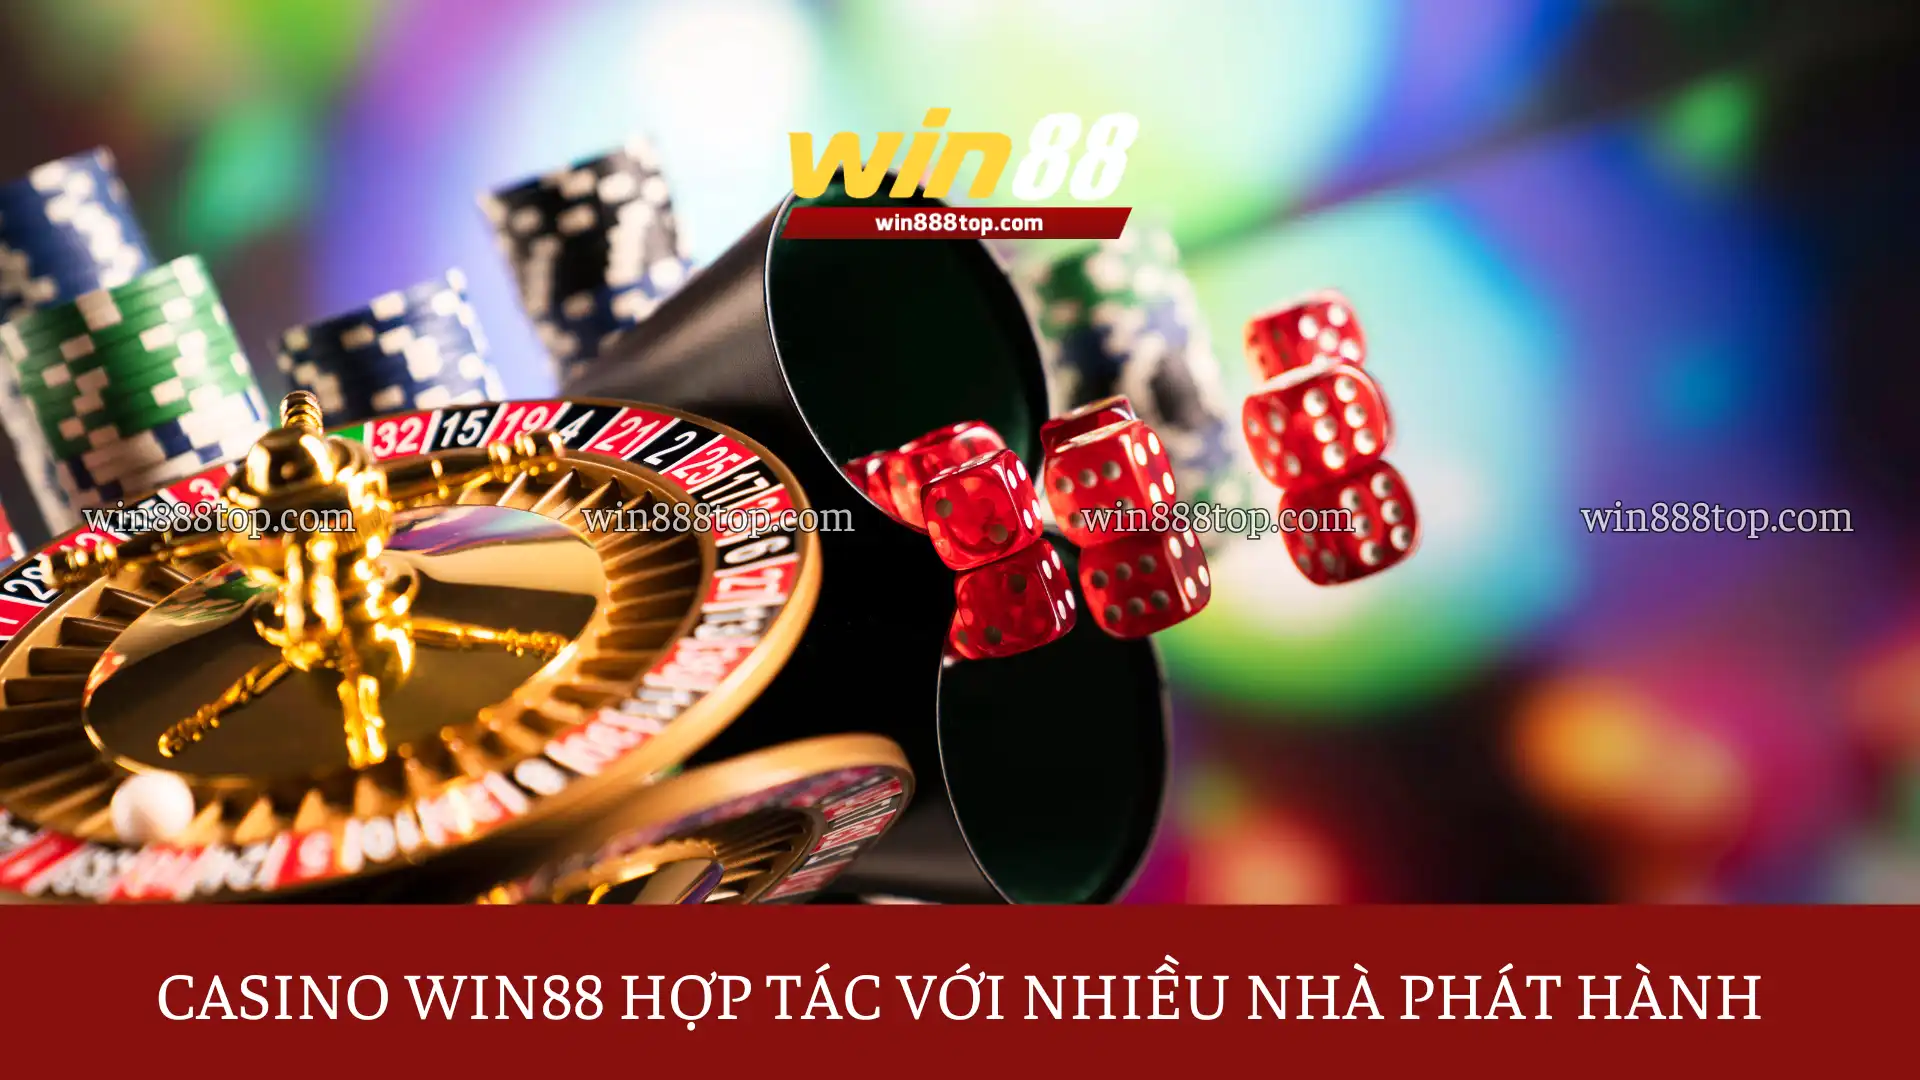 casino-win88-hop-tac-cung-nhieu-nha-phat-hanh